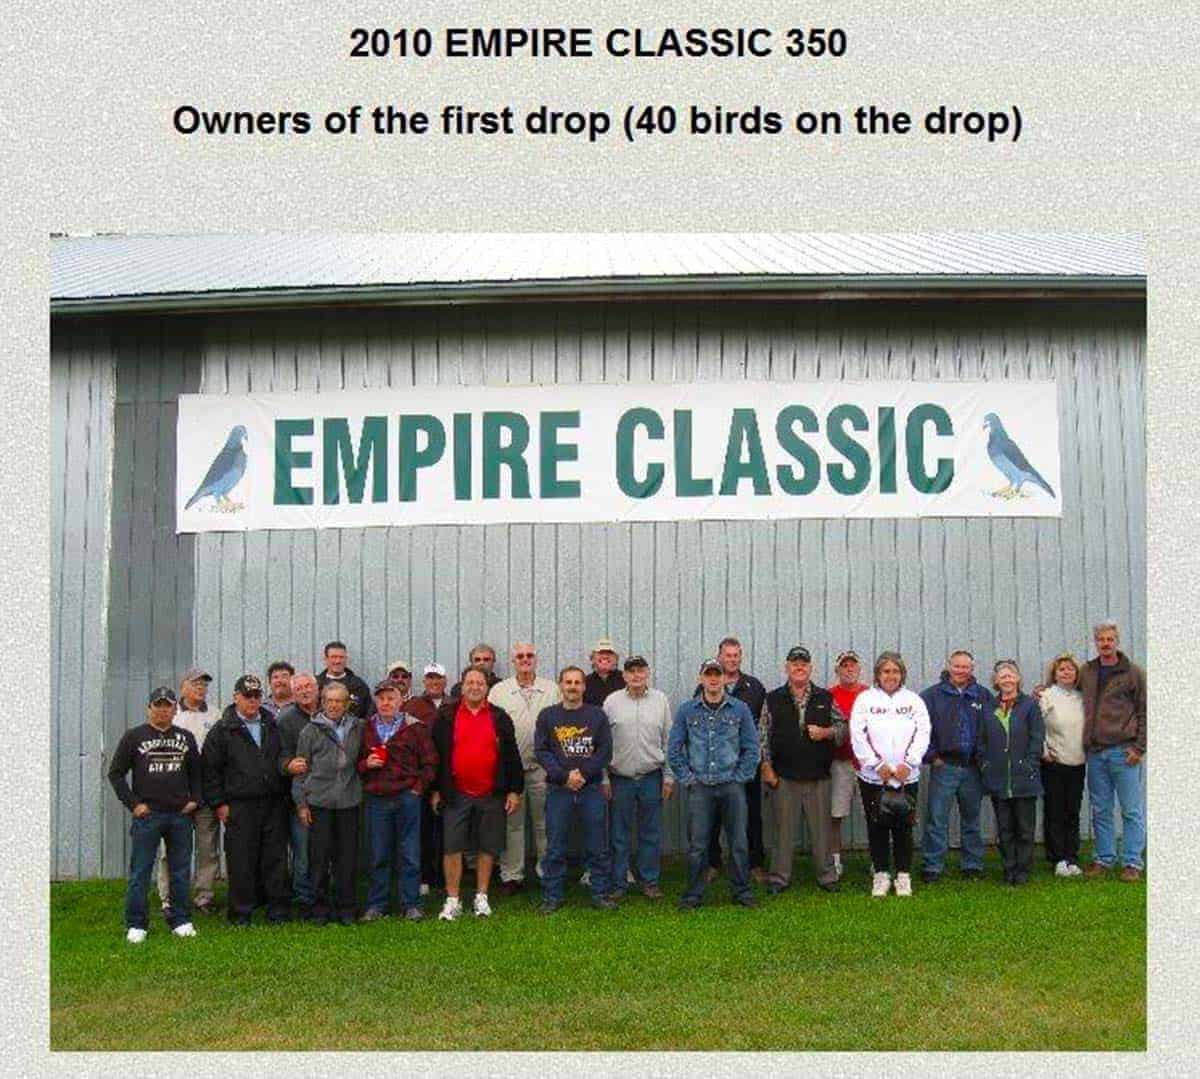 Empire Classic 350 Mile, Video 2010-09-5, Drop of 40 Birds